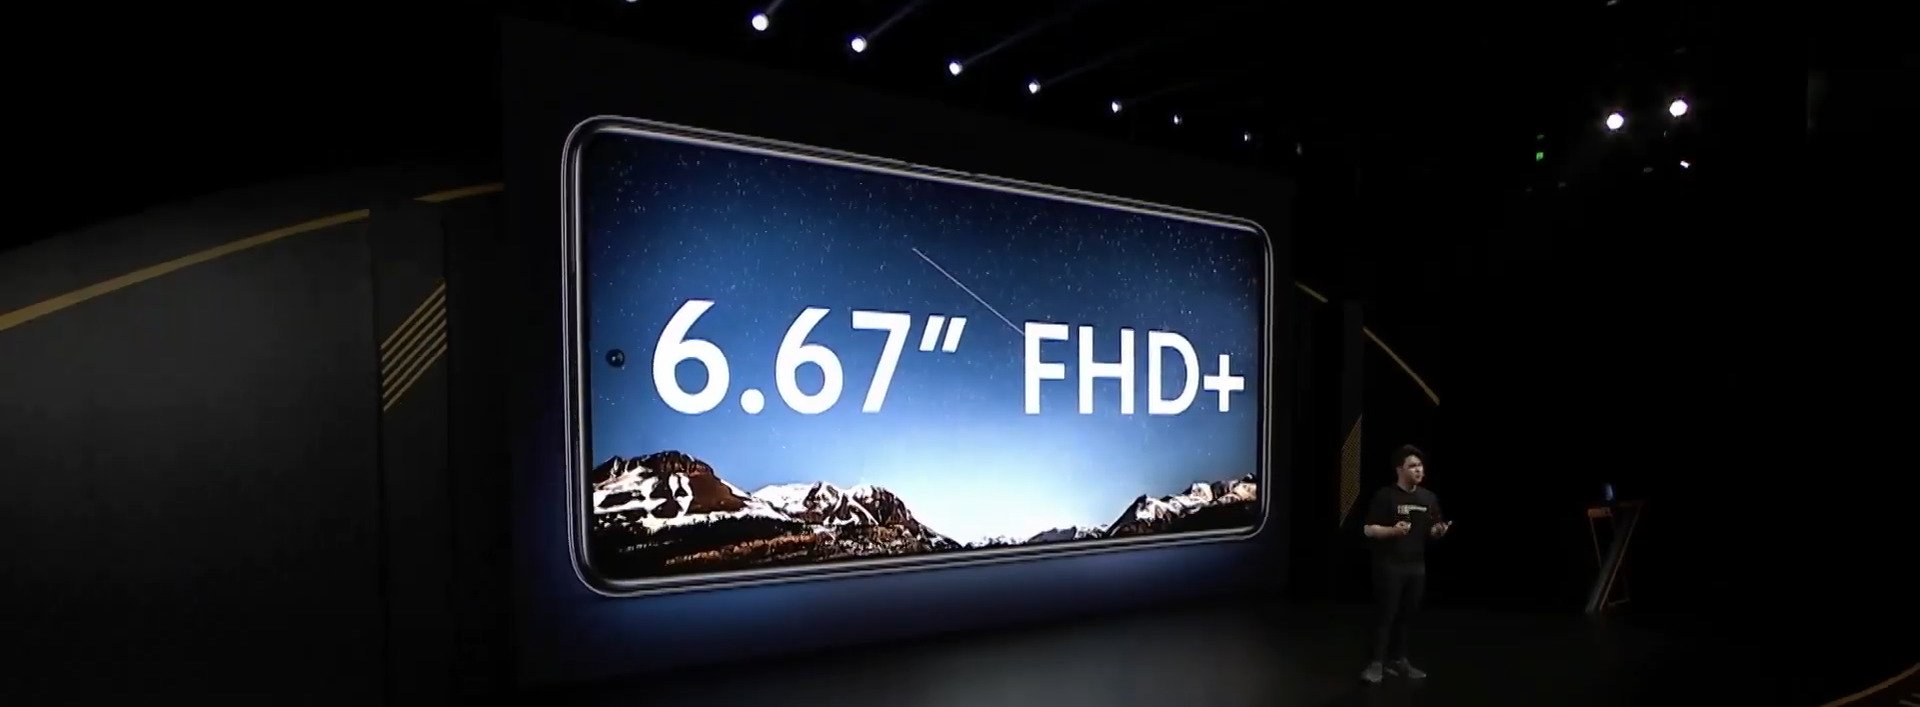 6.67" FHD+ Display on POCO X3